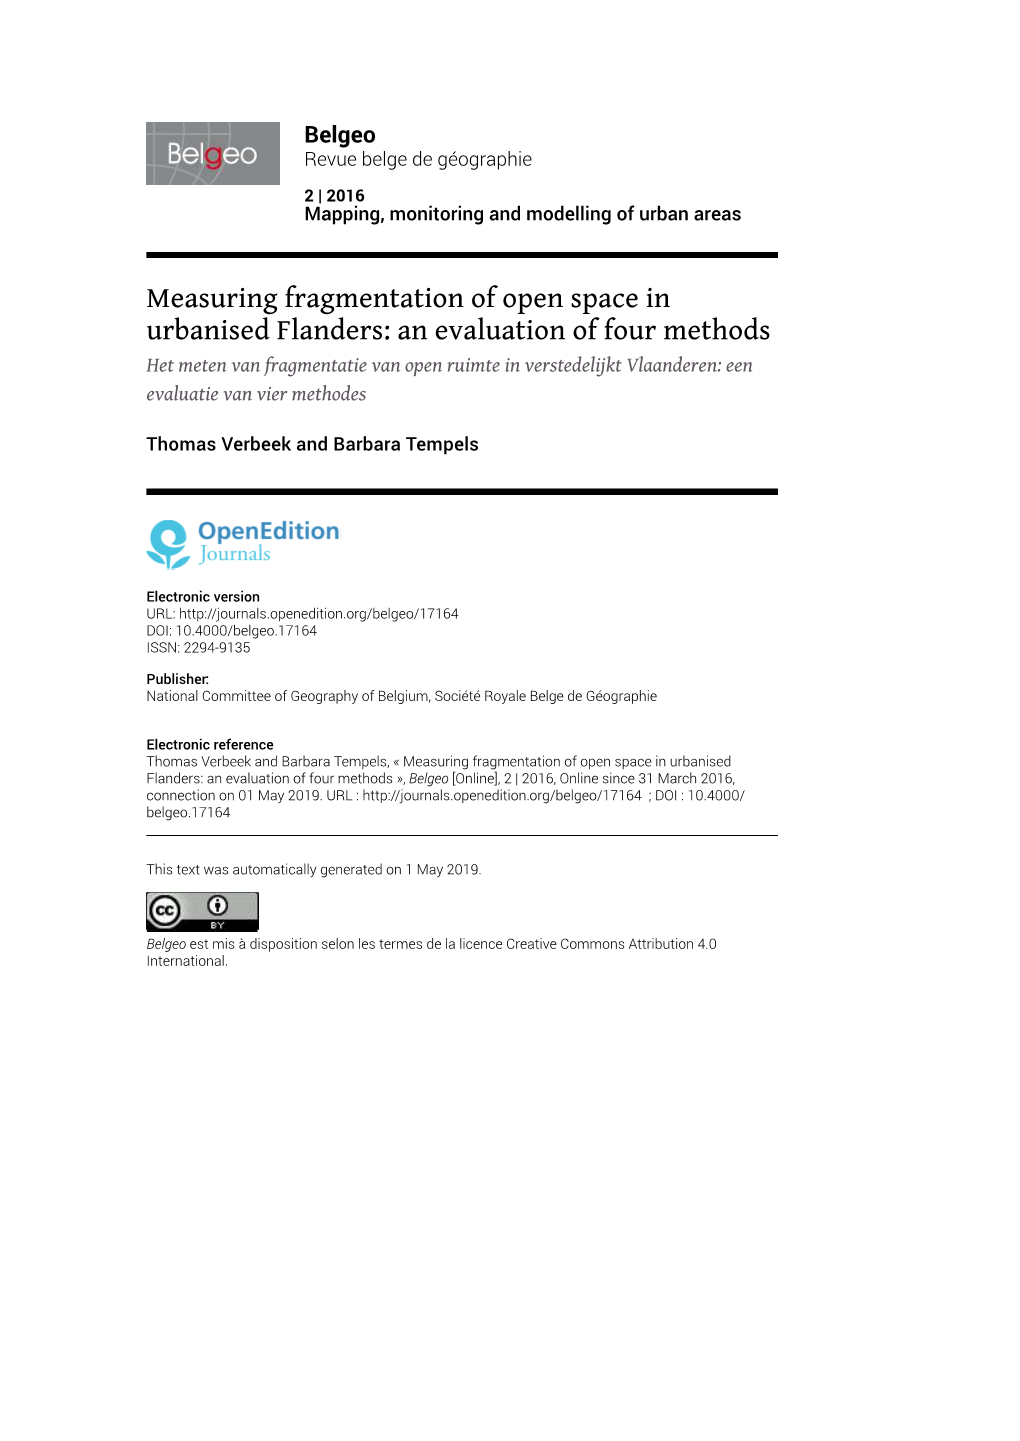 Measuring Fragmentation of Open Space in Urbanised Flanders: An